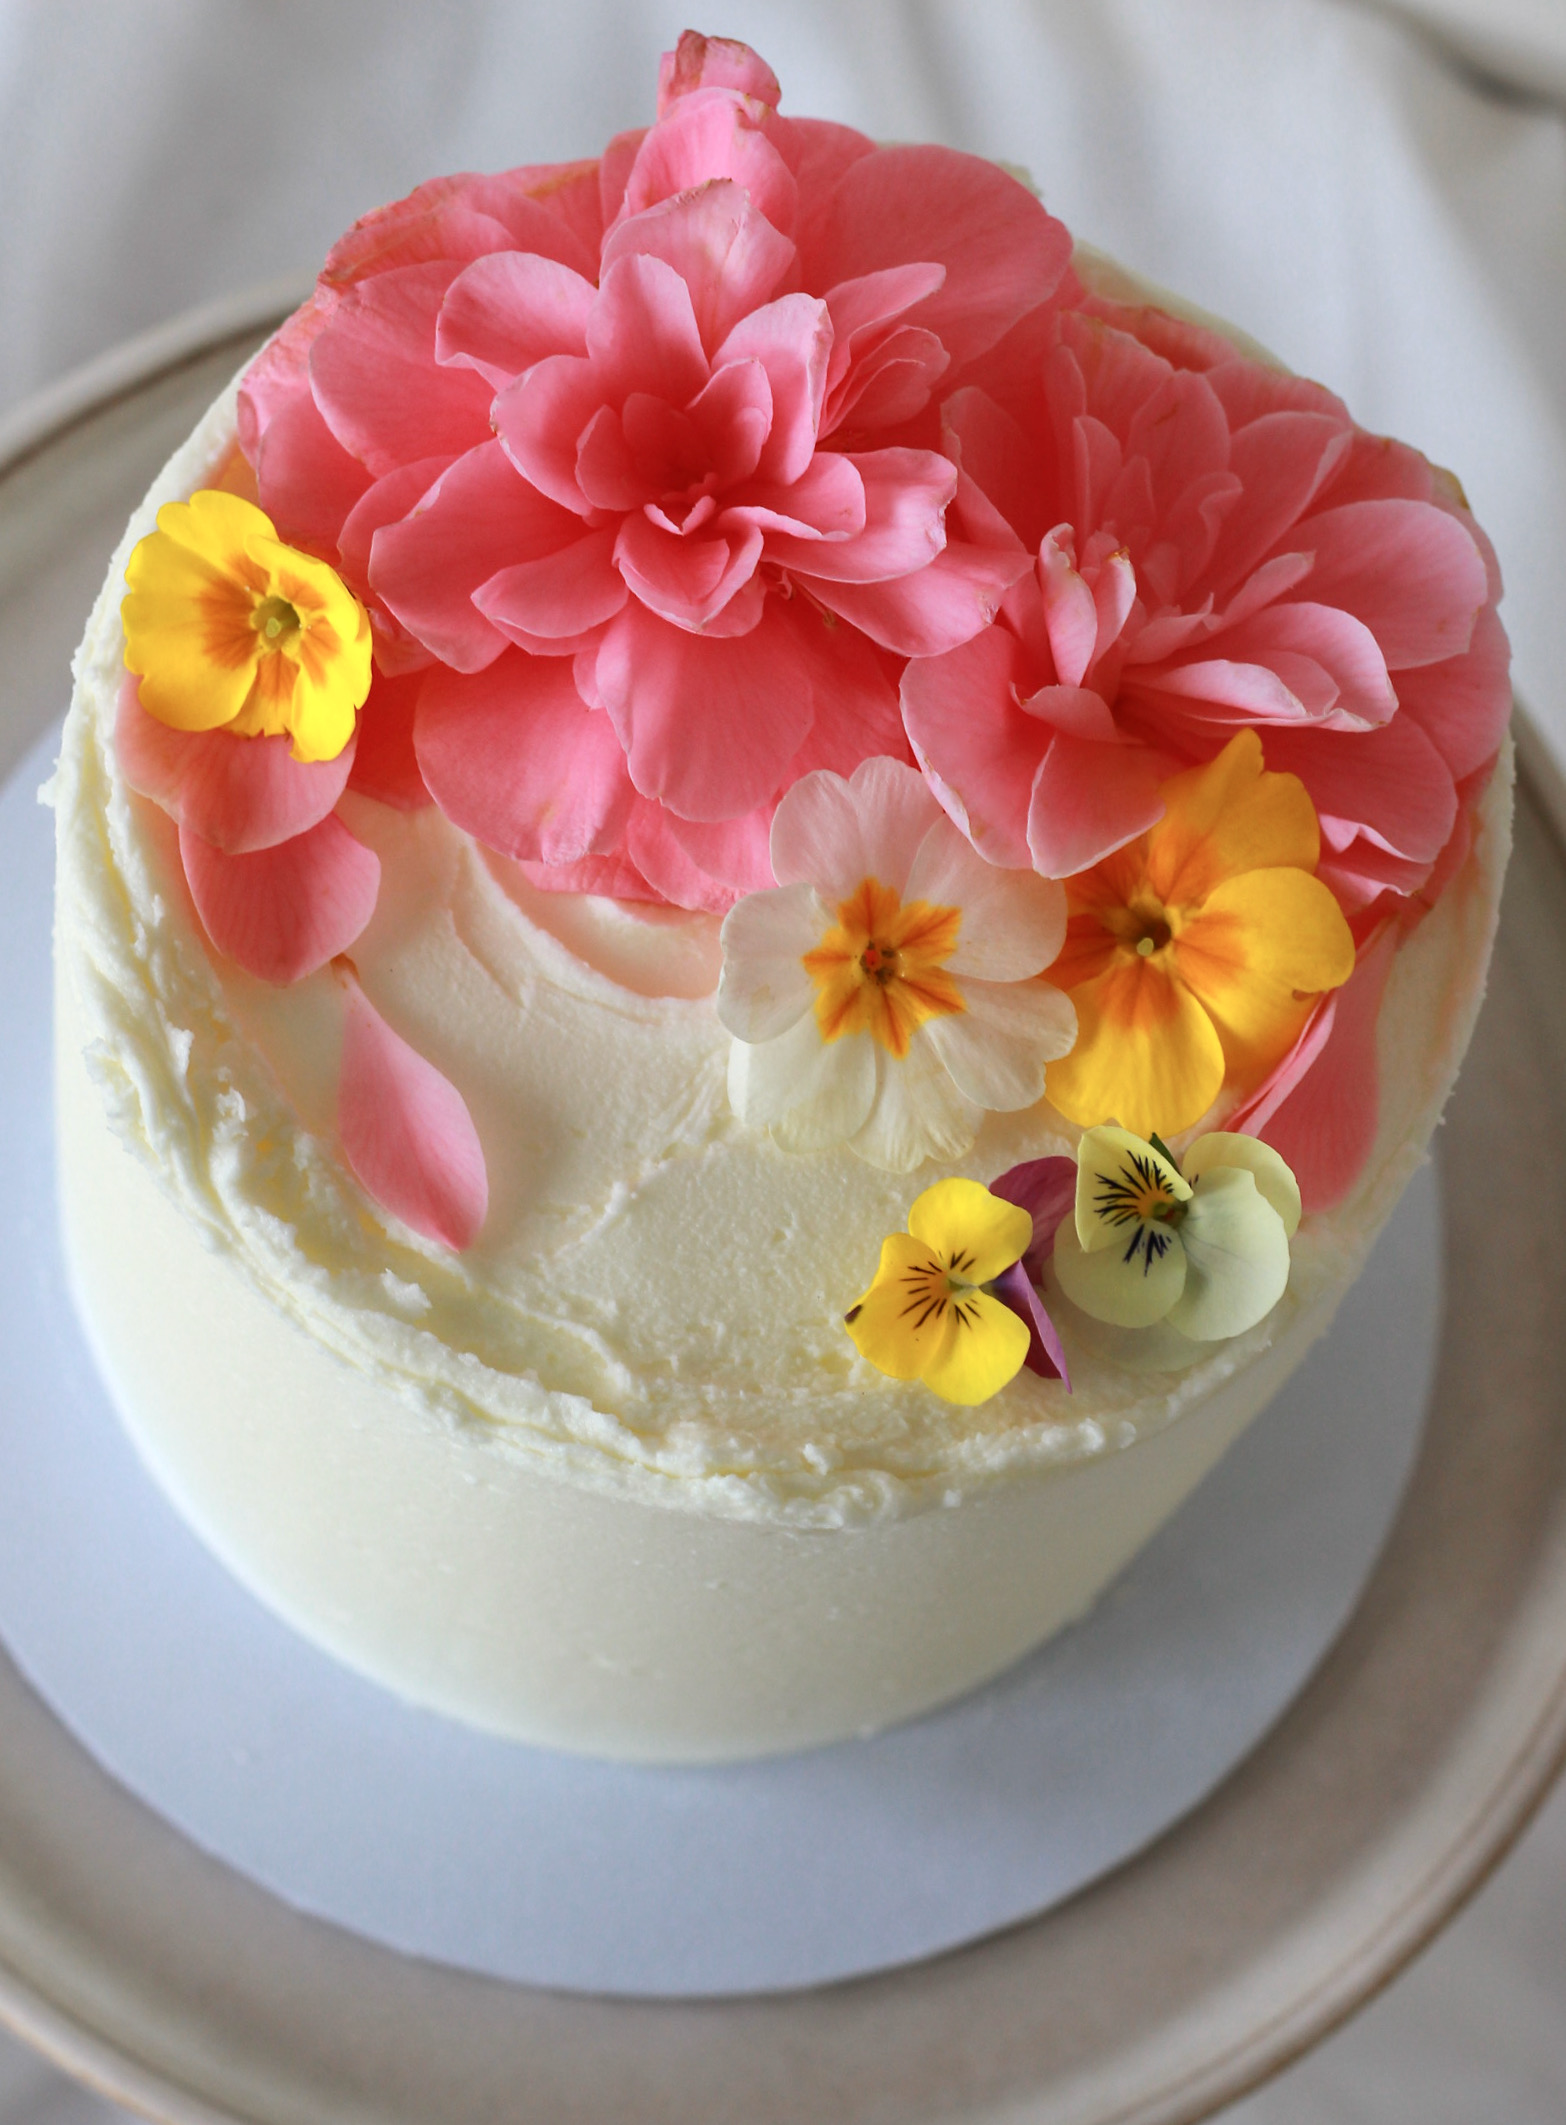 Lemon and elderflower cake with edible flowers